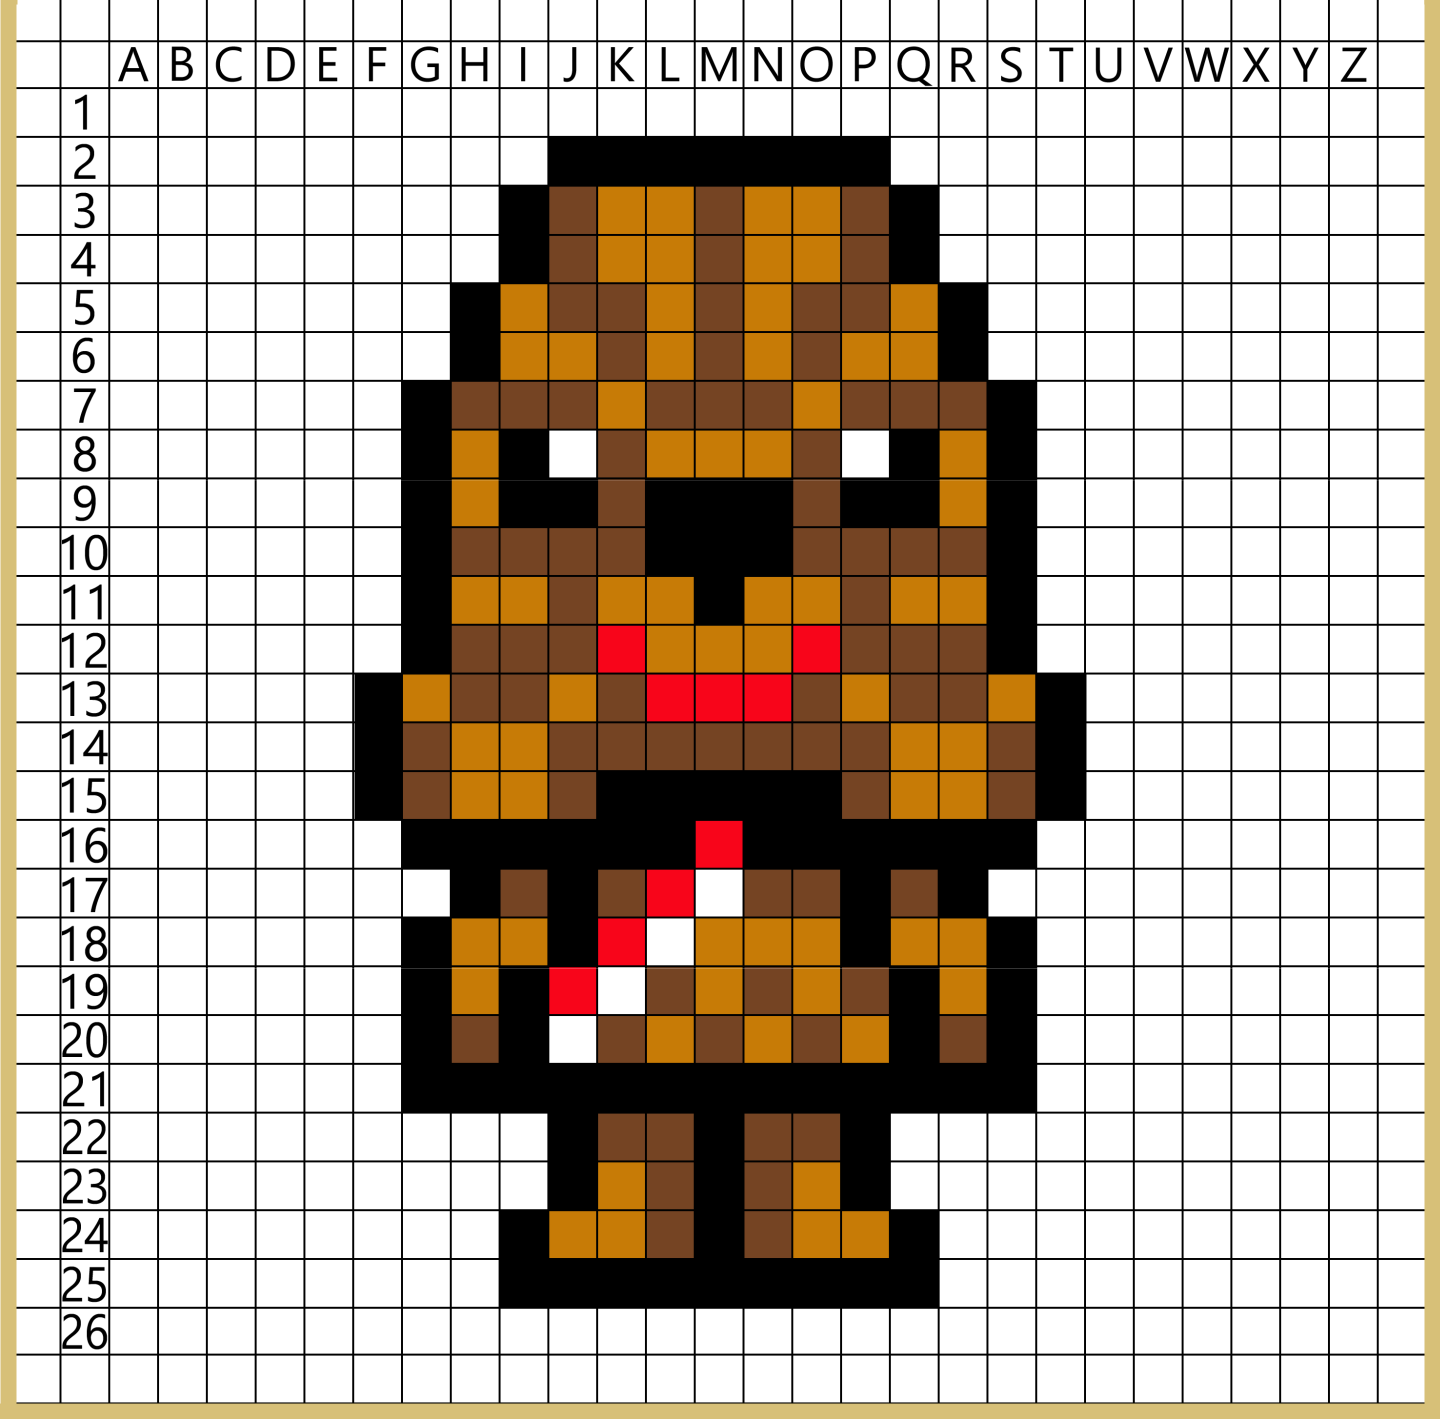 Star Wars Chewbacca Pixel art